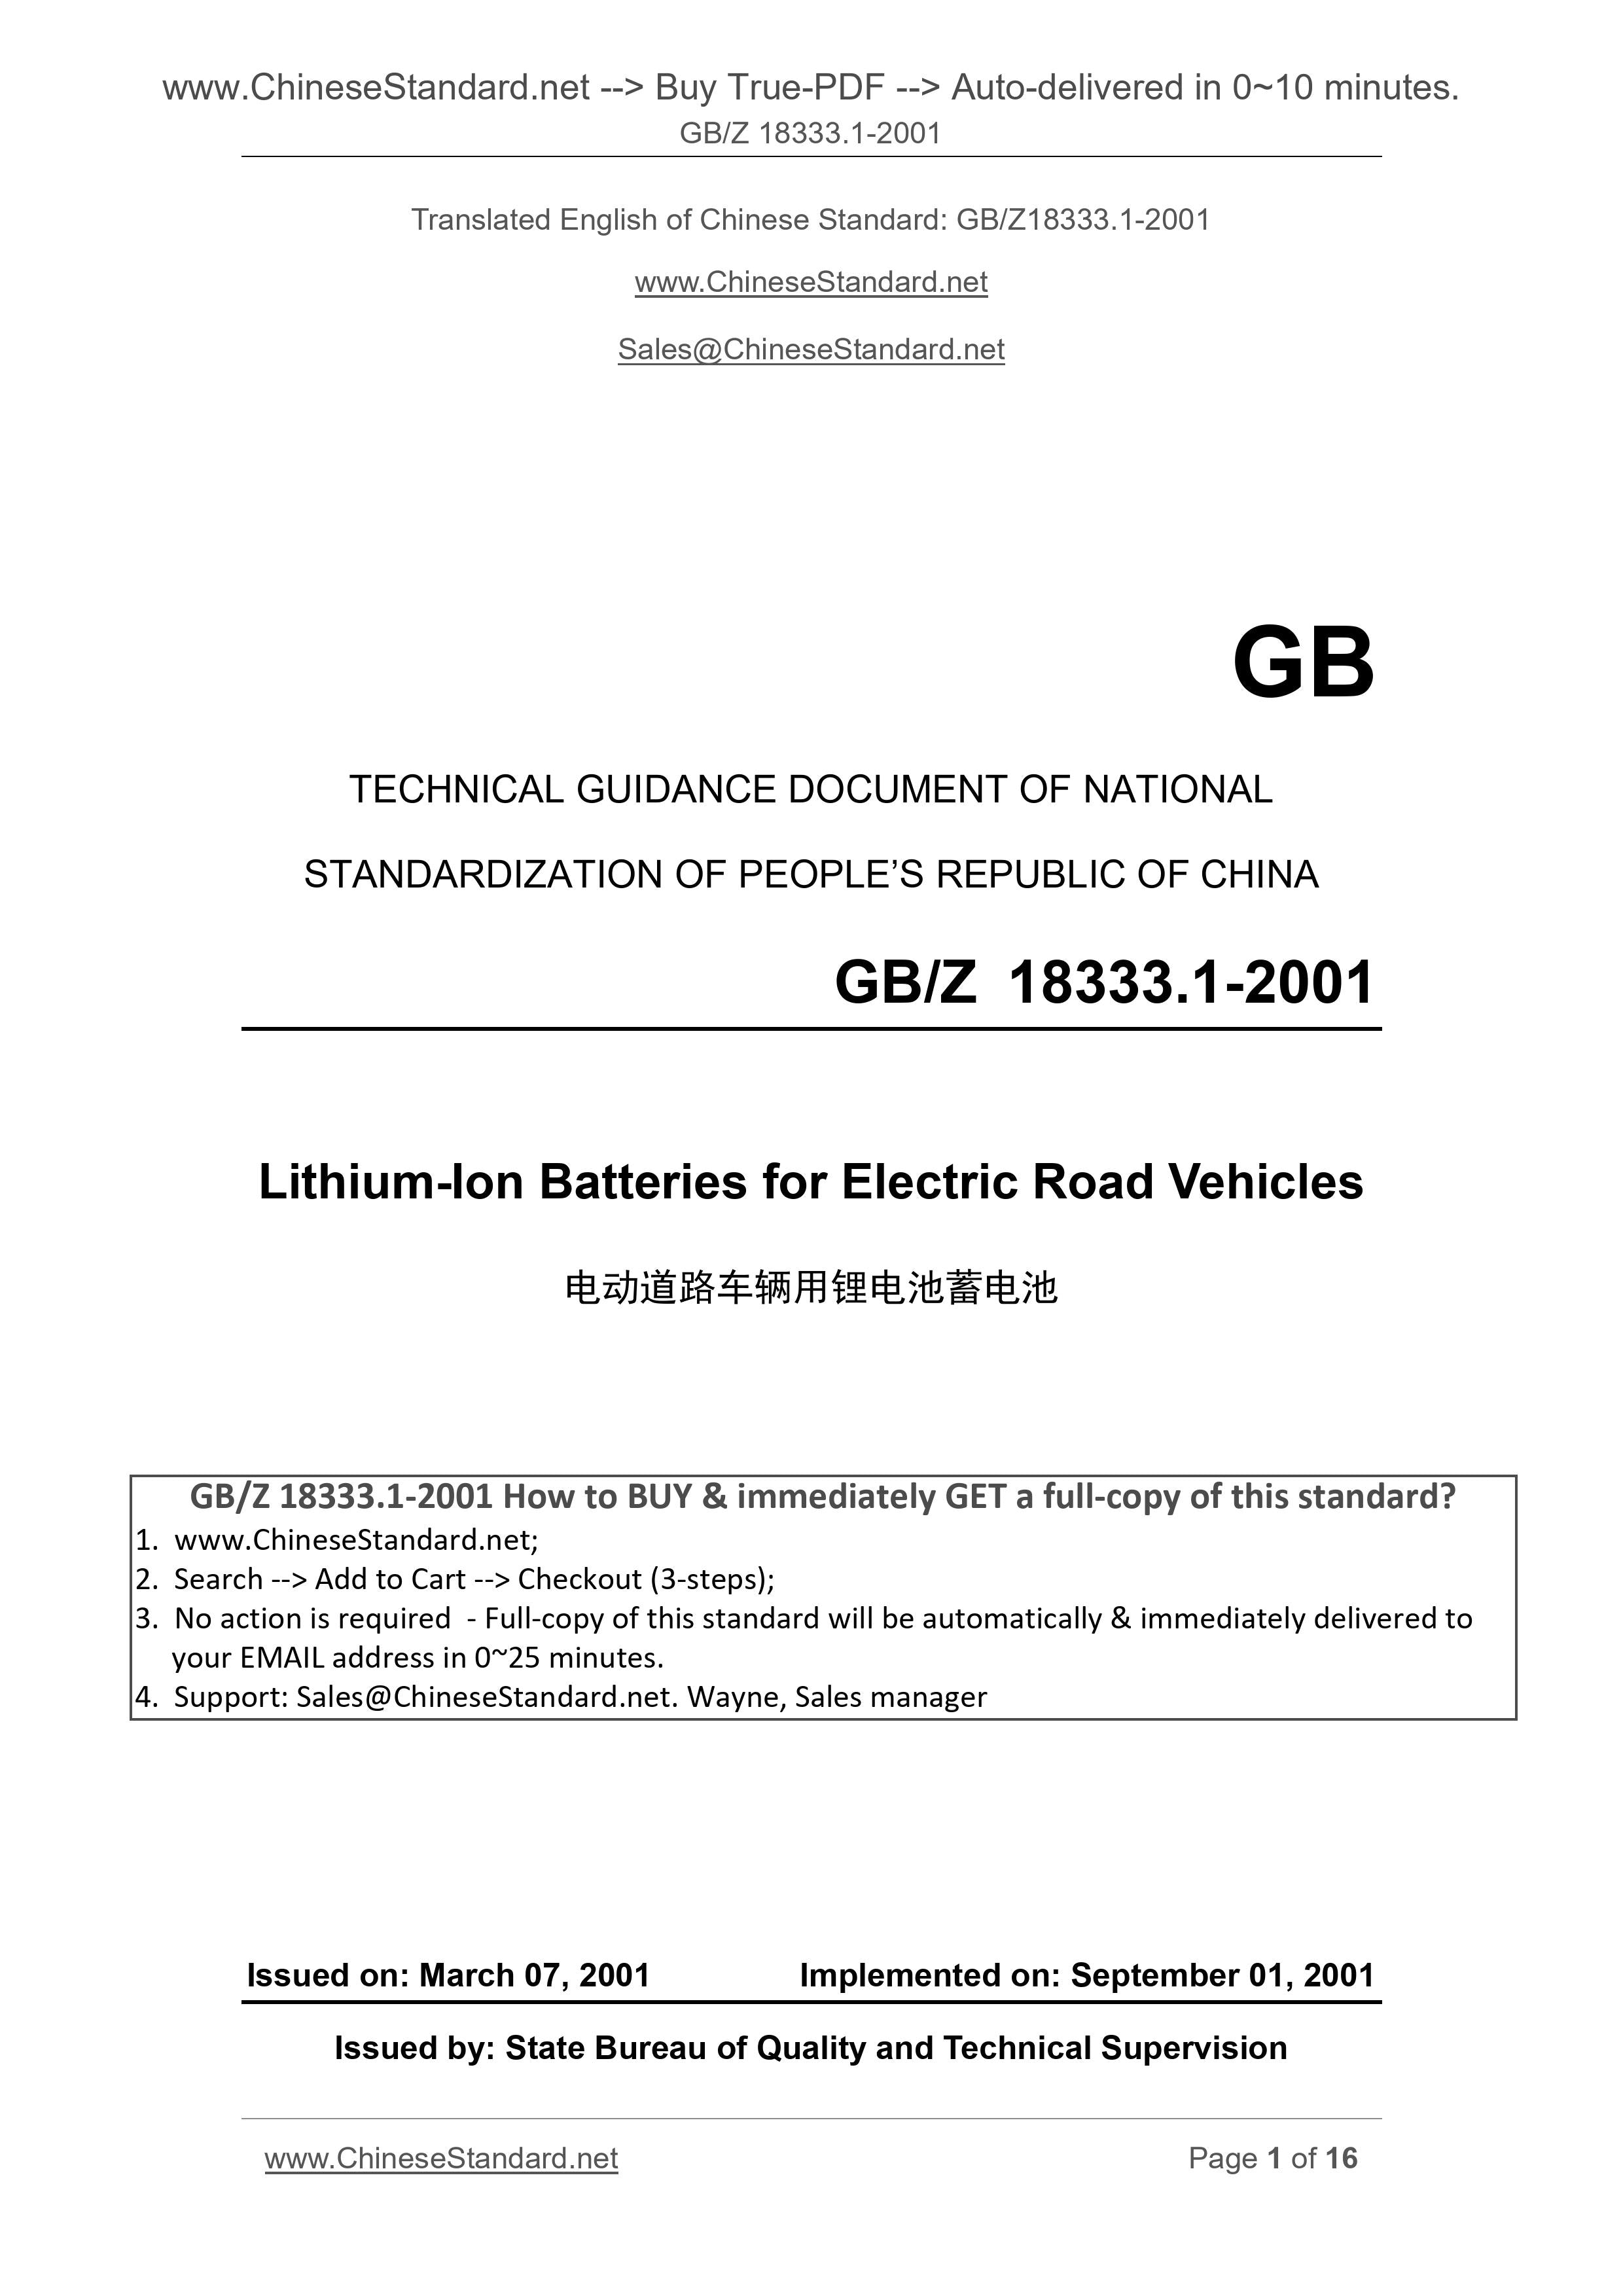 GB/Z 18333.1-2001 English PDF (GBZ18333.1-2001) – Sales 